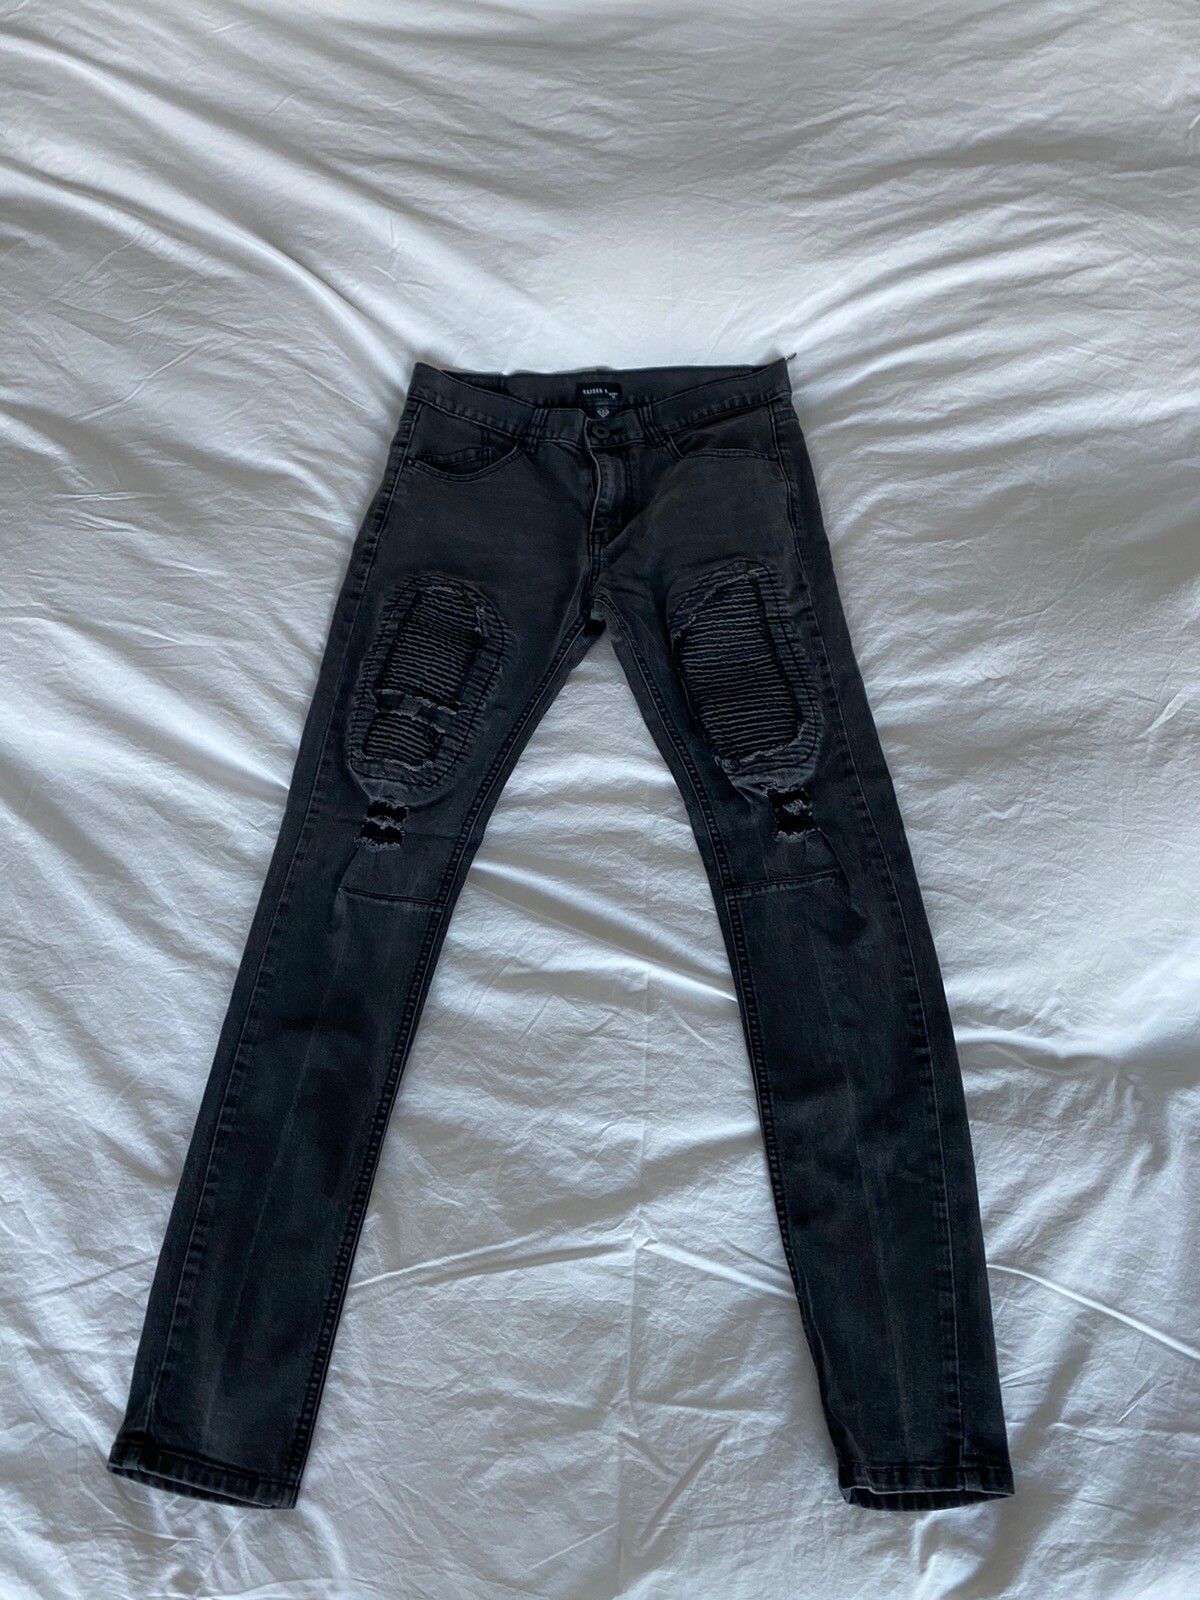 Kayden K Dark Grey Kayden K Jeans with Rips at the knee | Grailed